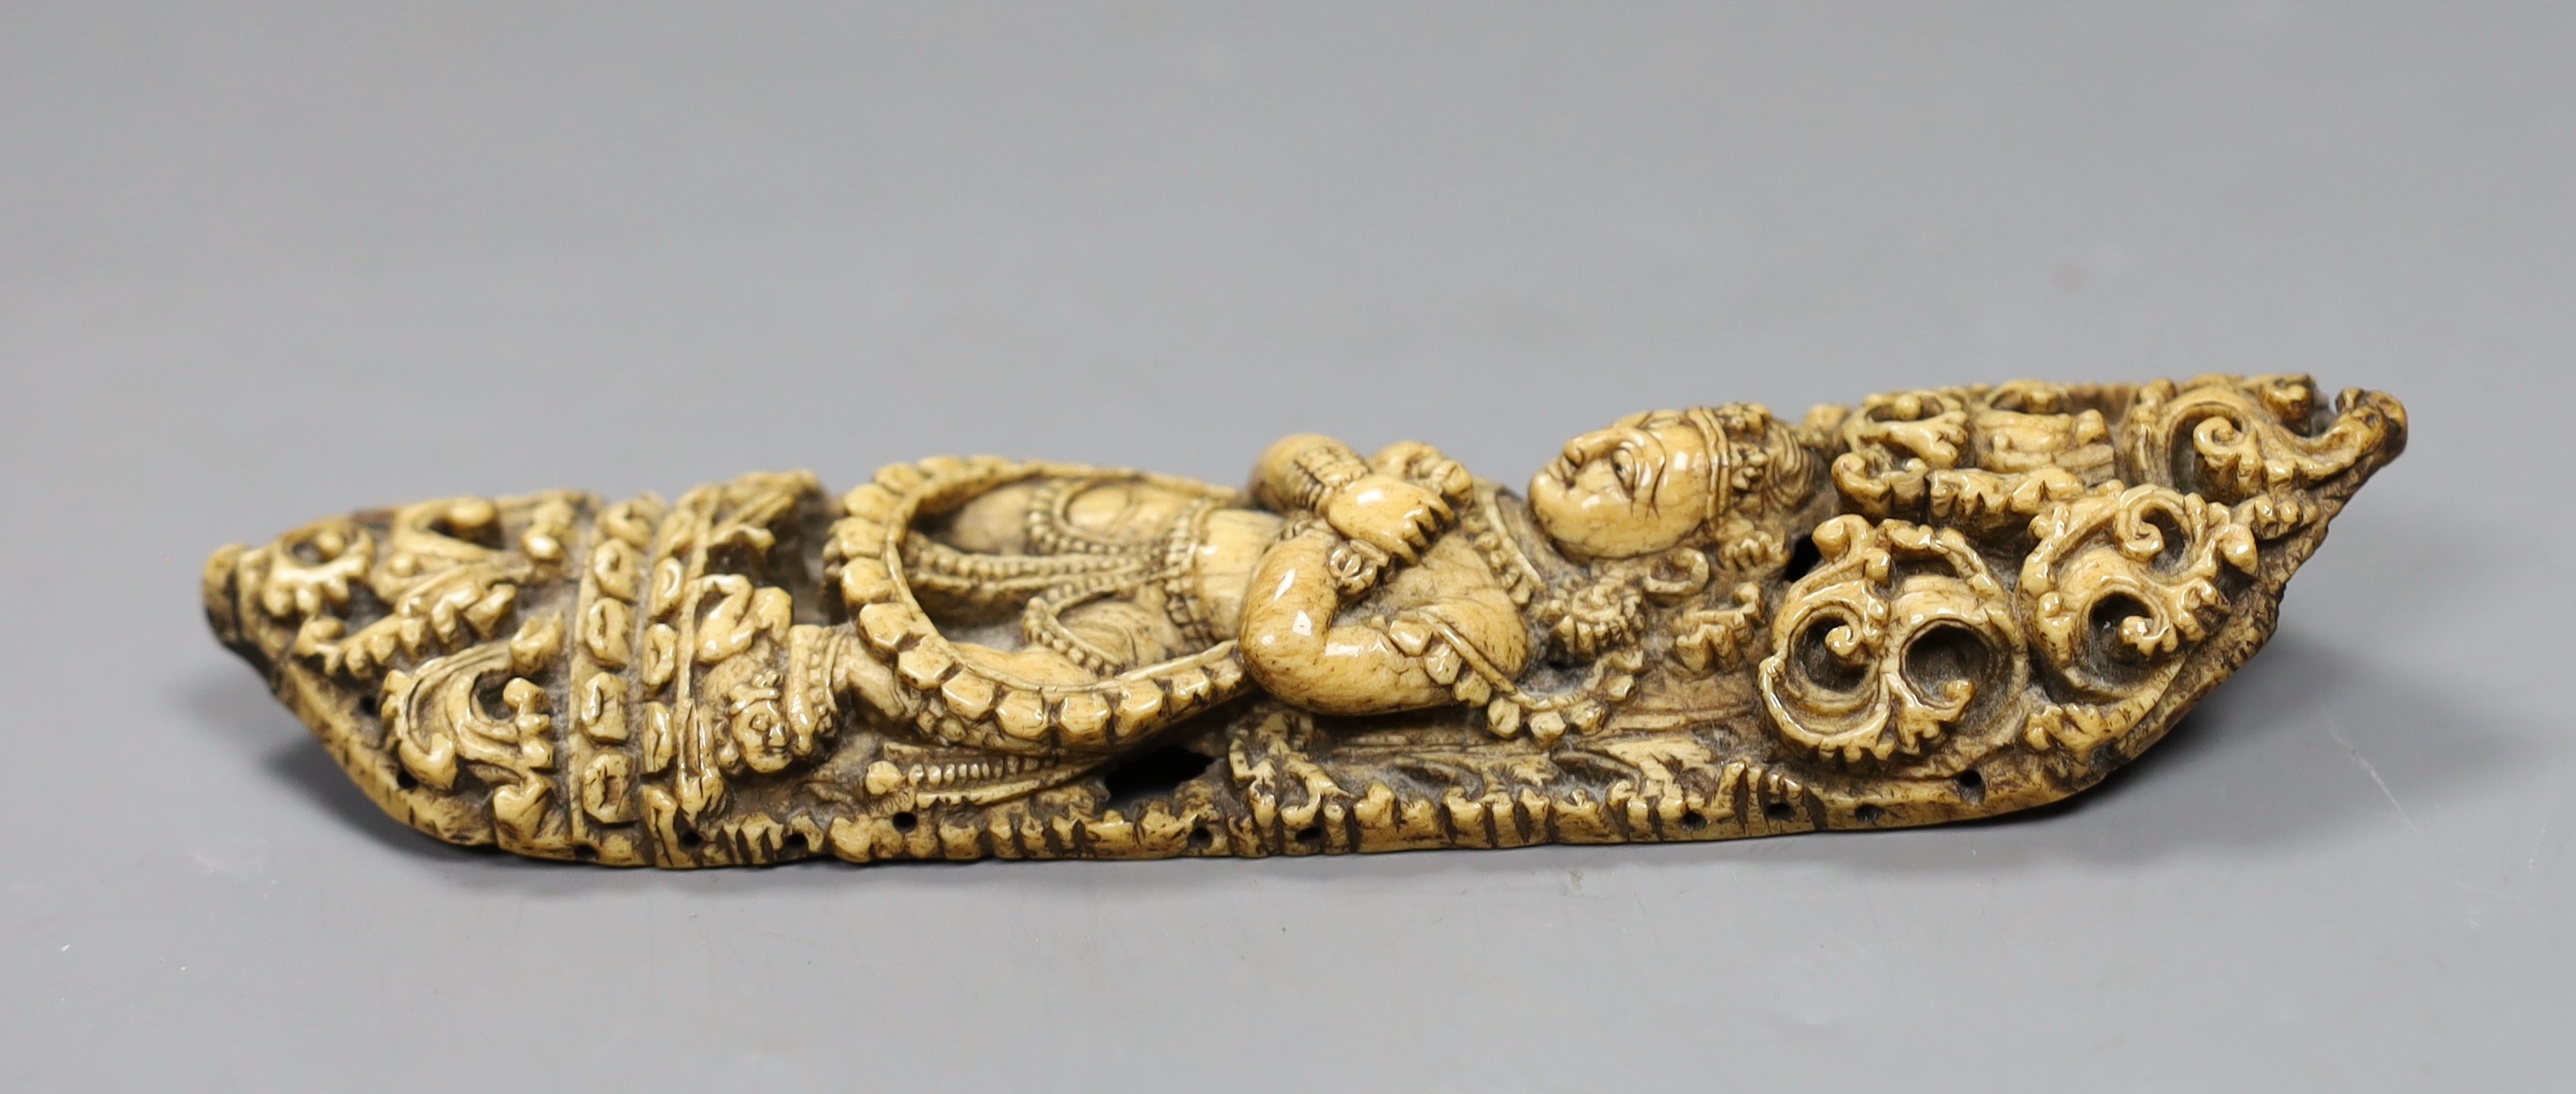 A 19th century Burmese bone carving of a Buddhist deity, 15cm tall